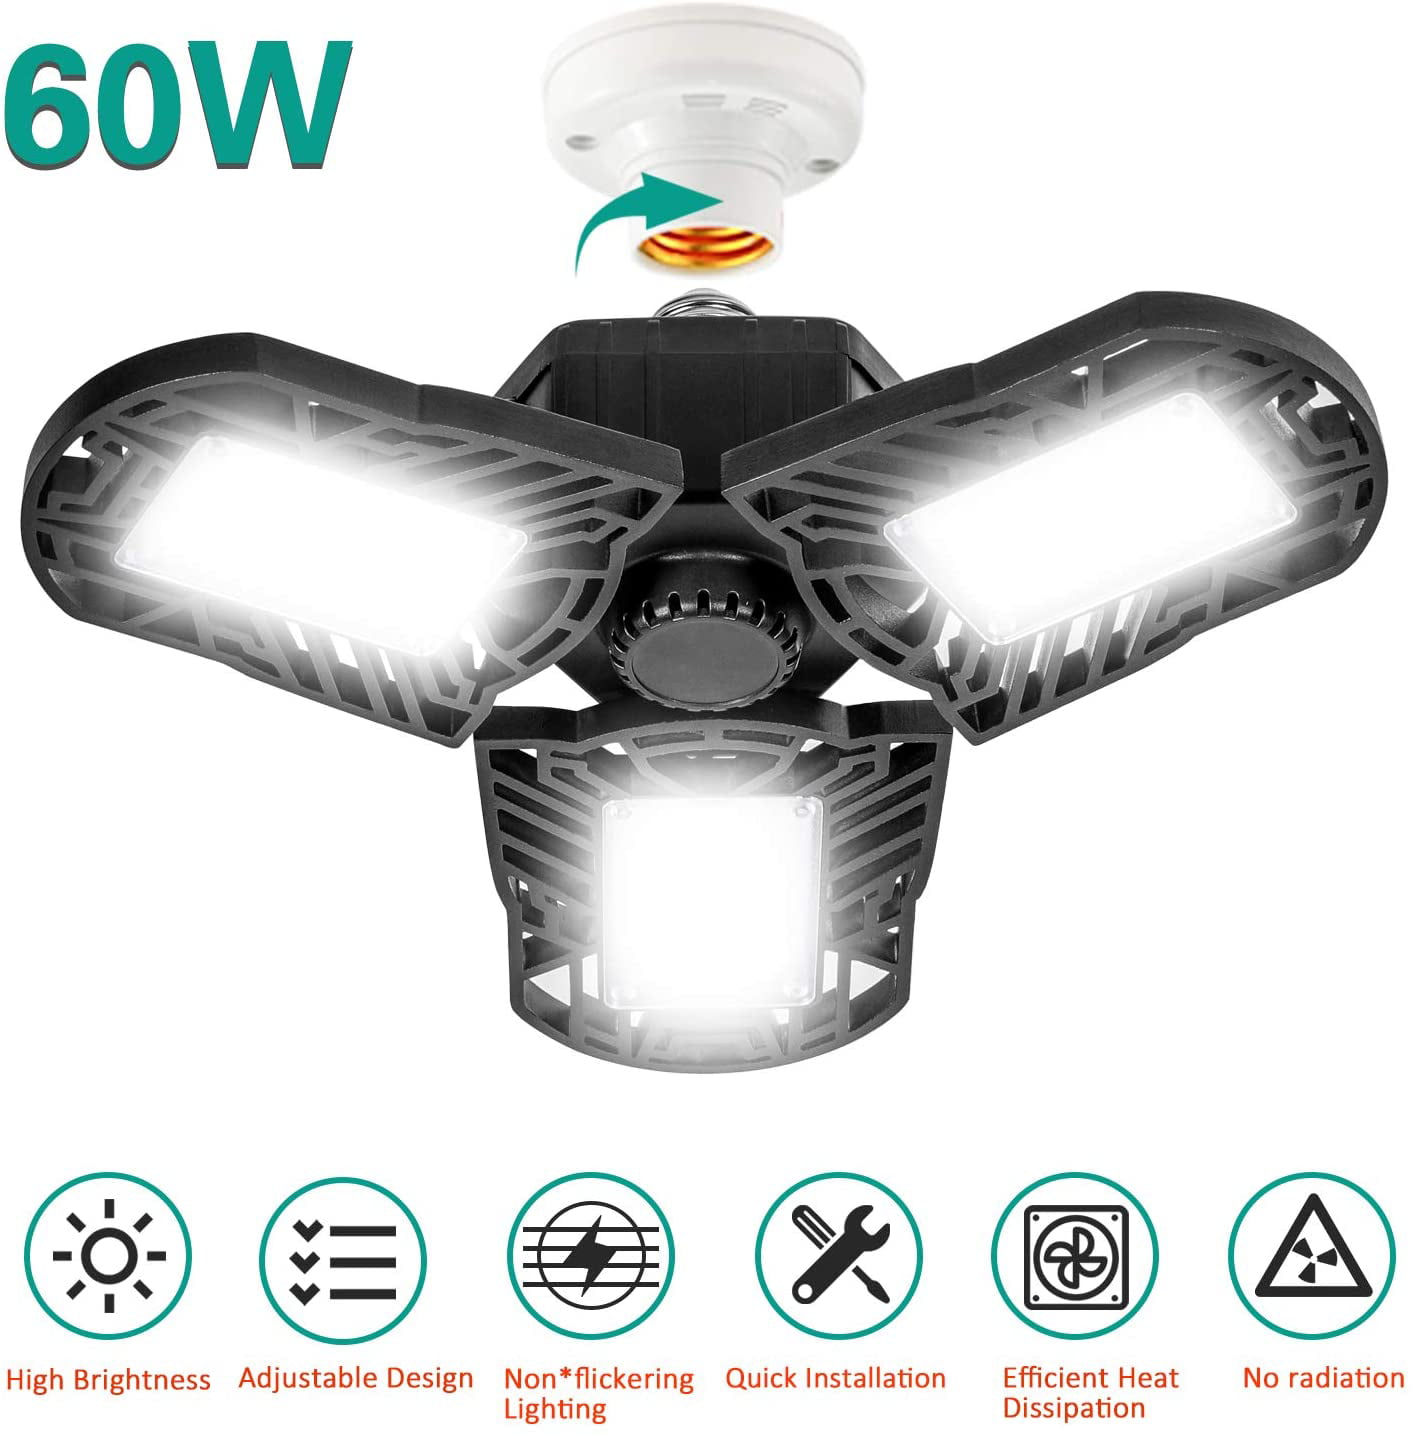 Details about   60W E27 LED Garage Shop Work Lights 6000lm Home Ceiling Fixture Deformable Lamp 